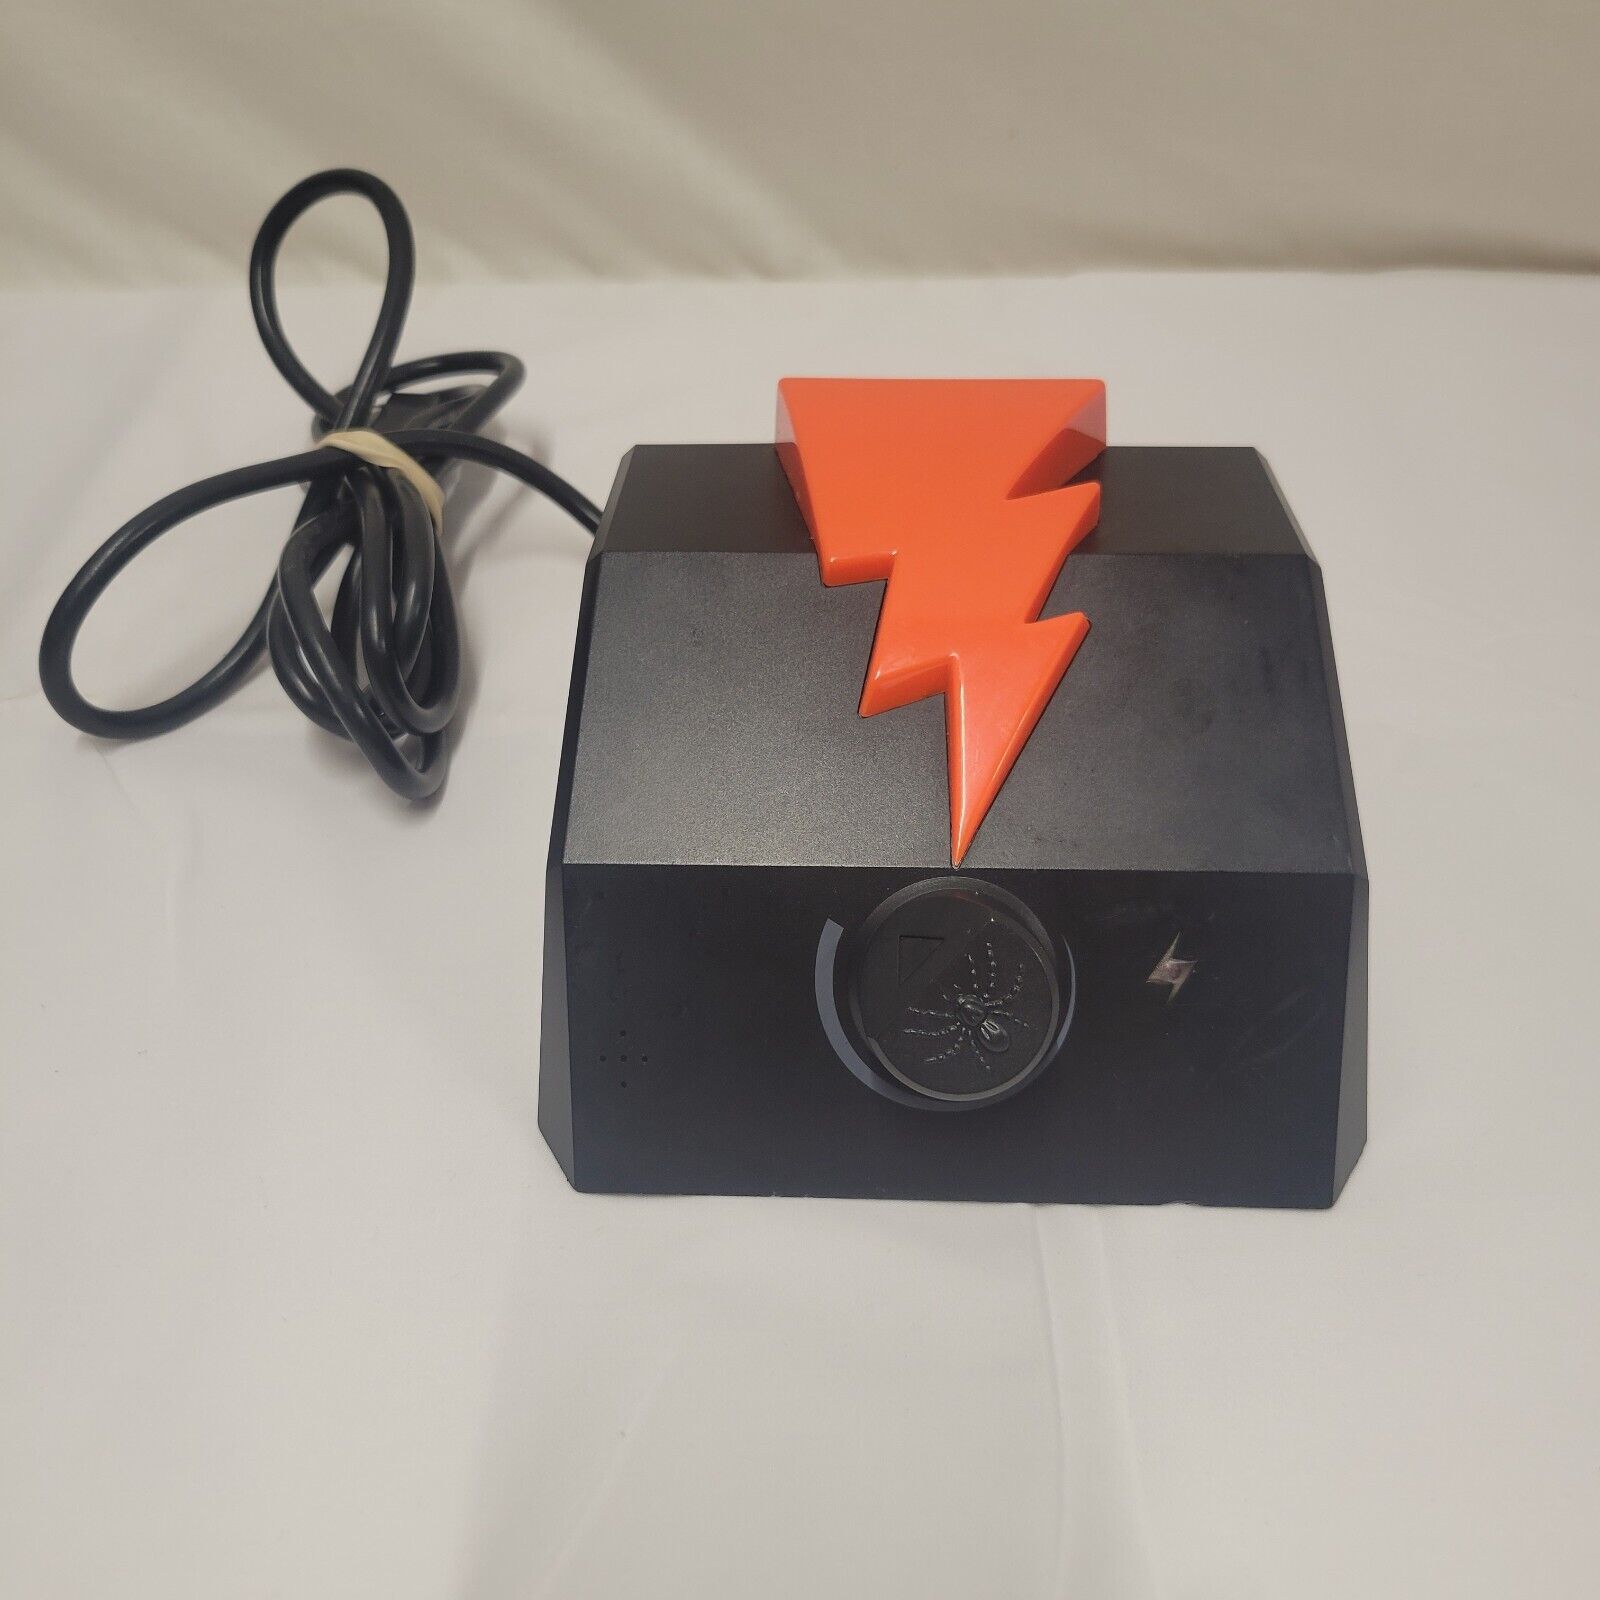 HPI Can You Imagine Lighting FX Thunder Lightning Effects Tested